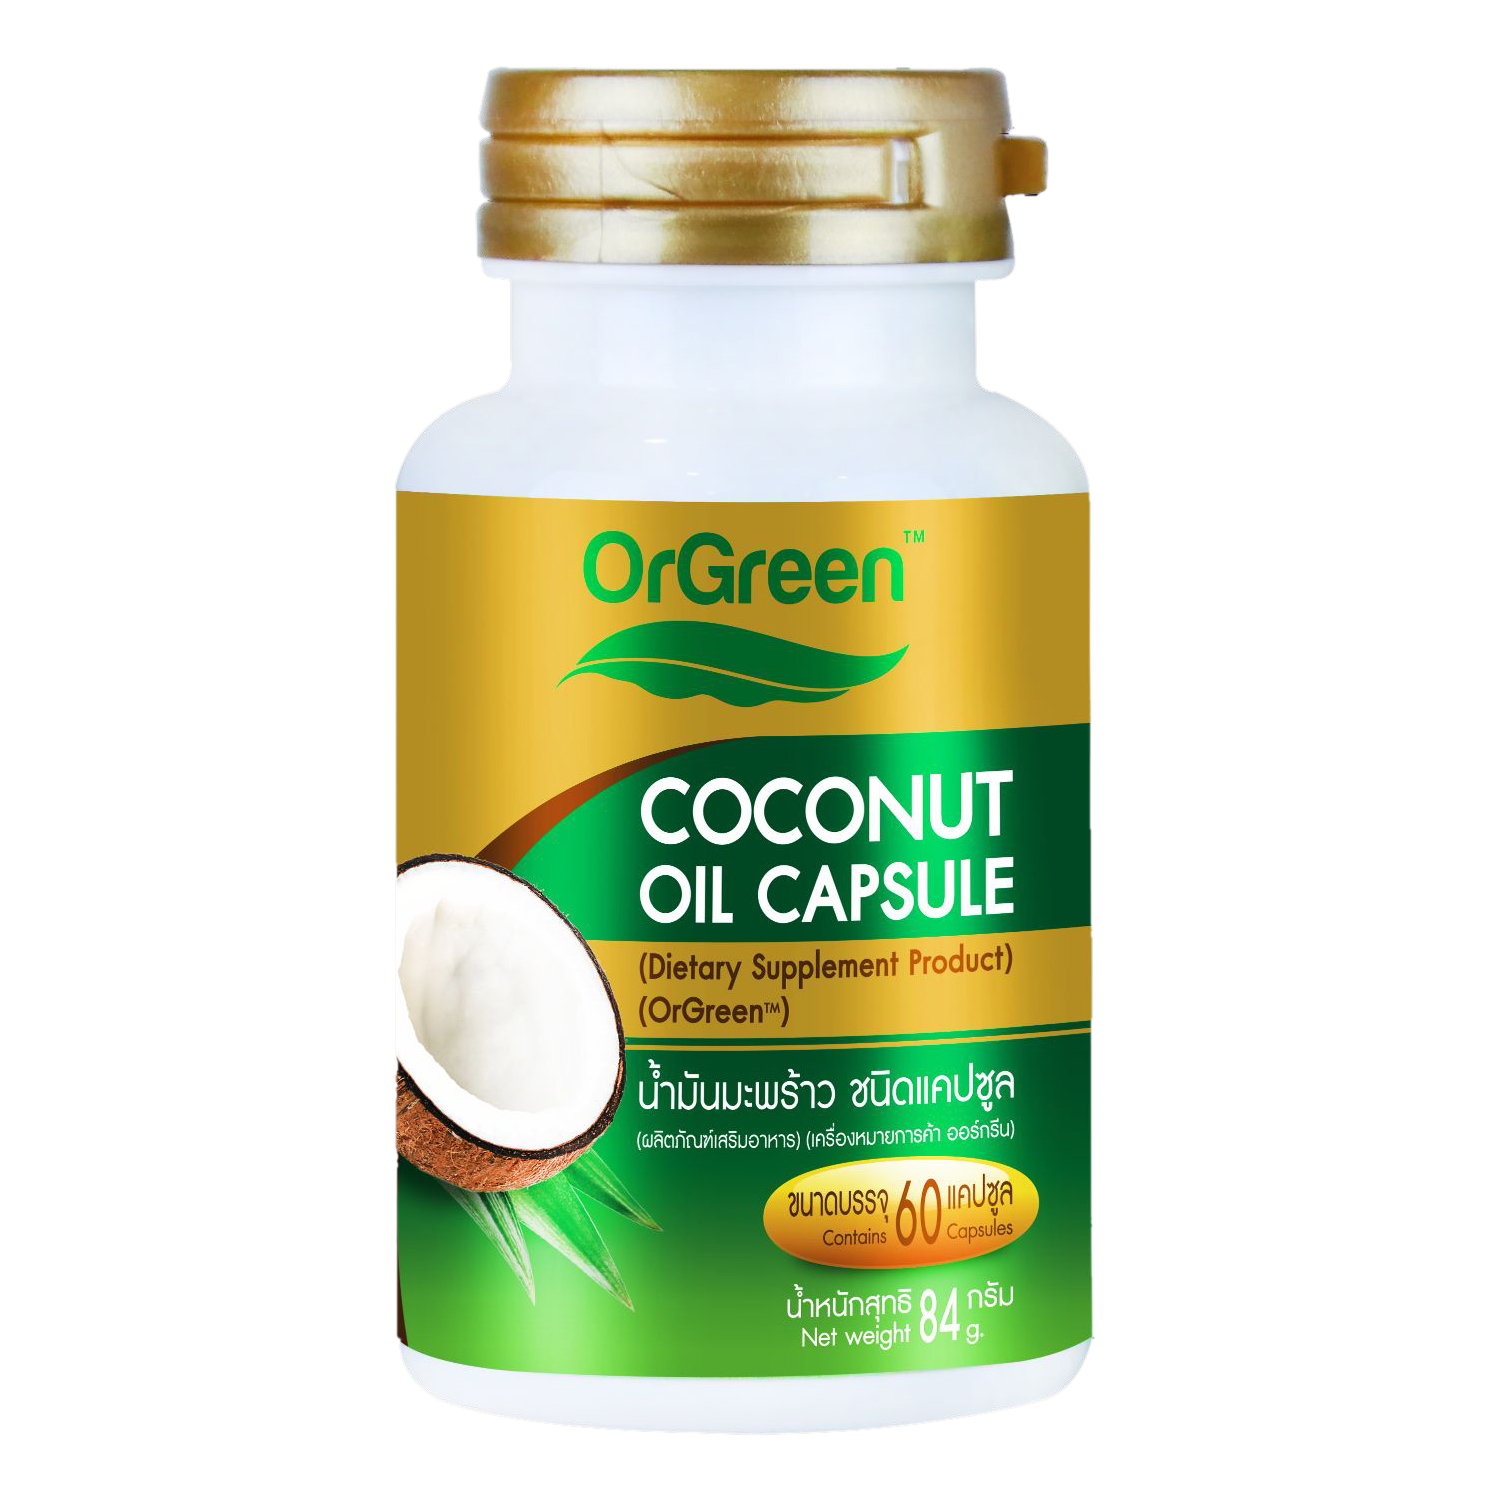 Orgreen Coconut Oil Capsule น้ำมันมะพร้าว ชนิดแคปซูล 60 capsule ราคาส่งถูกๆ W.135 รหัส GU106